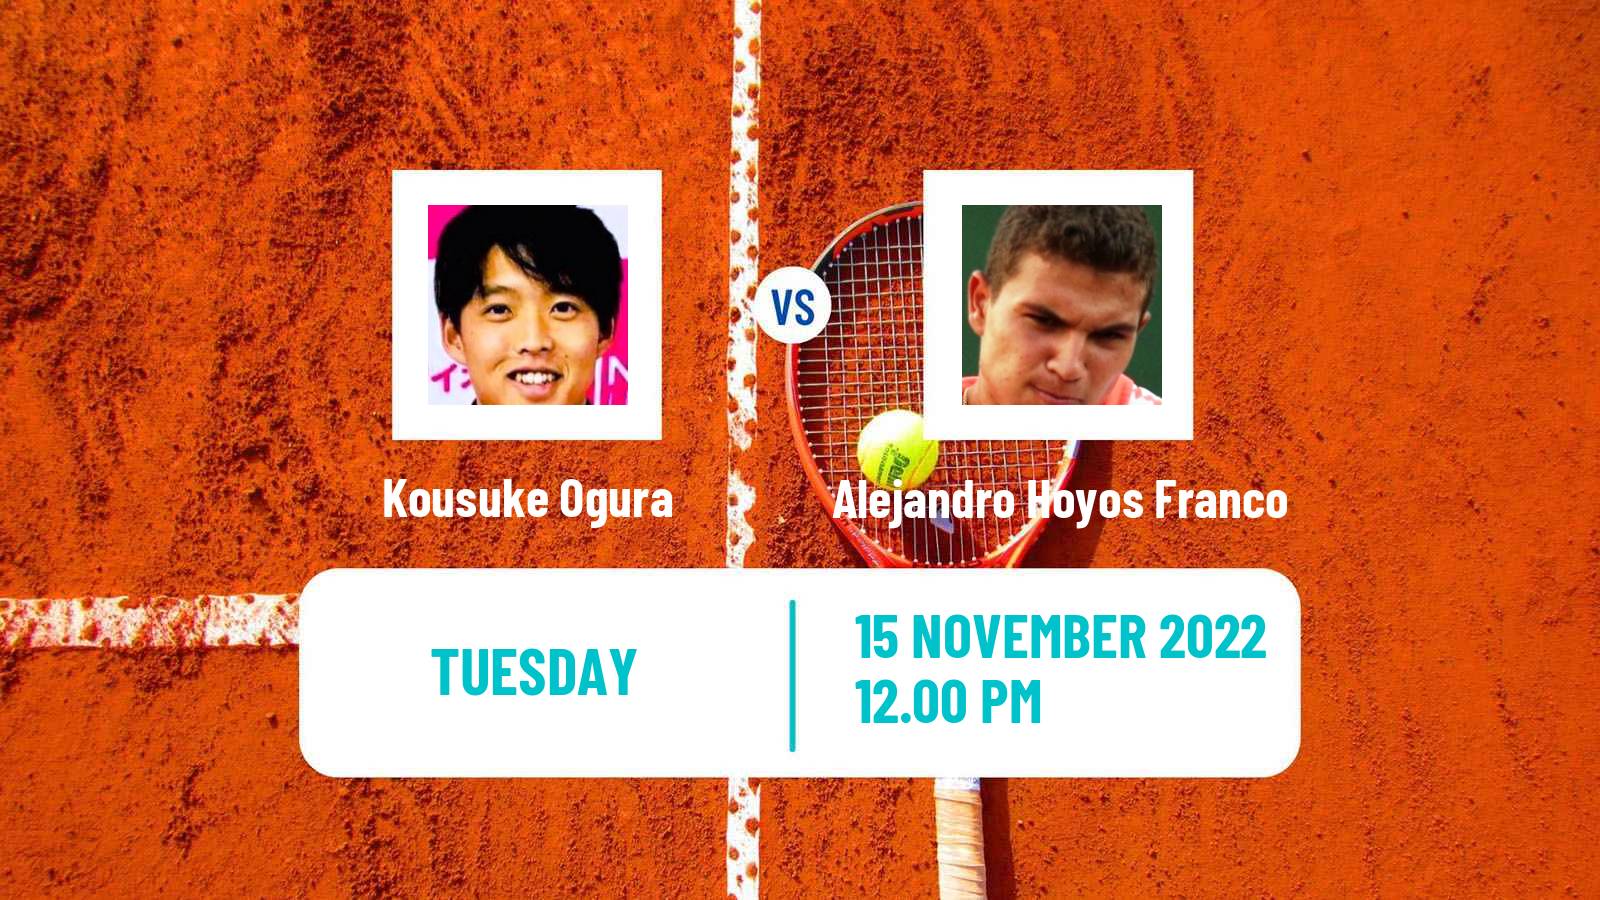 Tennis ITF Tournaments Kousuke Ogura - Alejandro Hoyos Franco